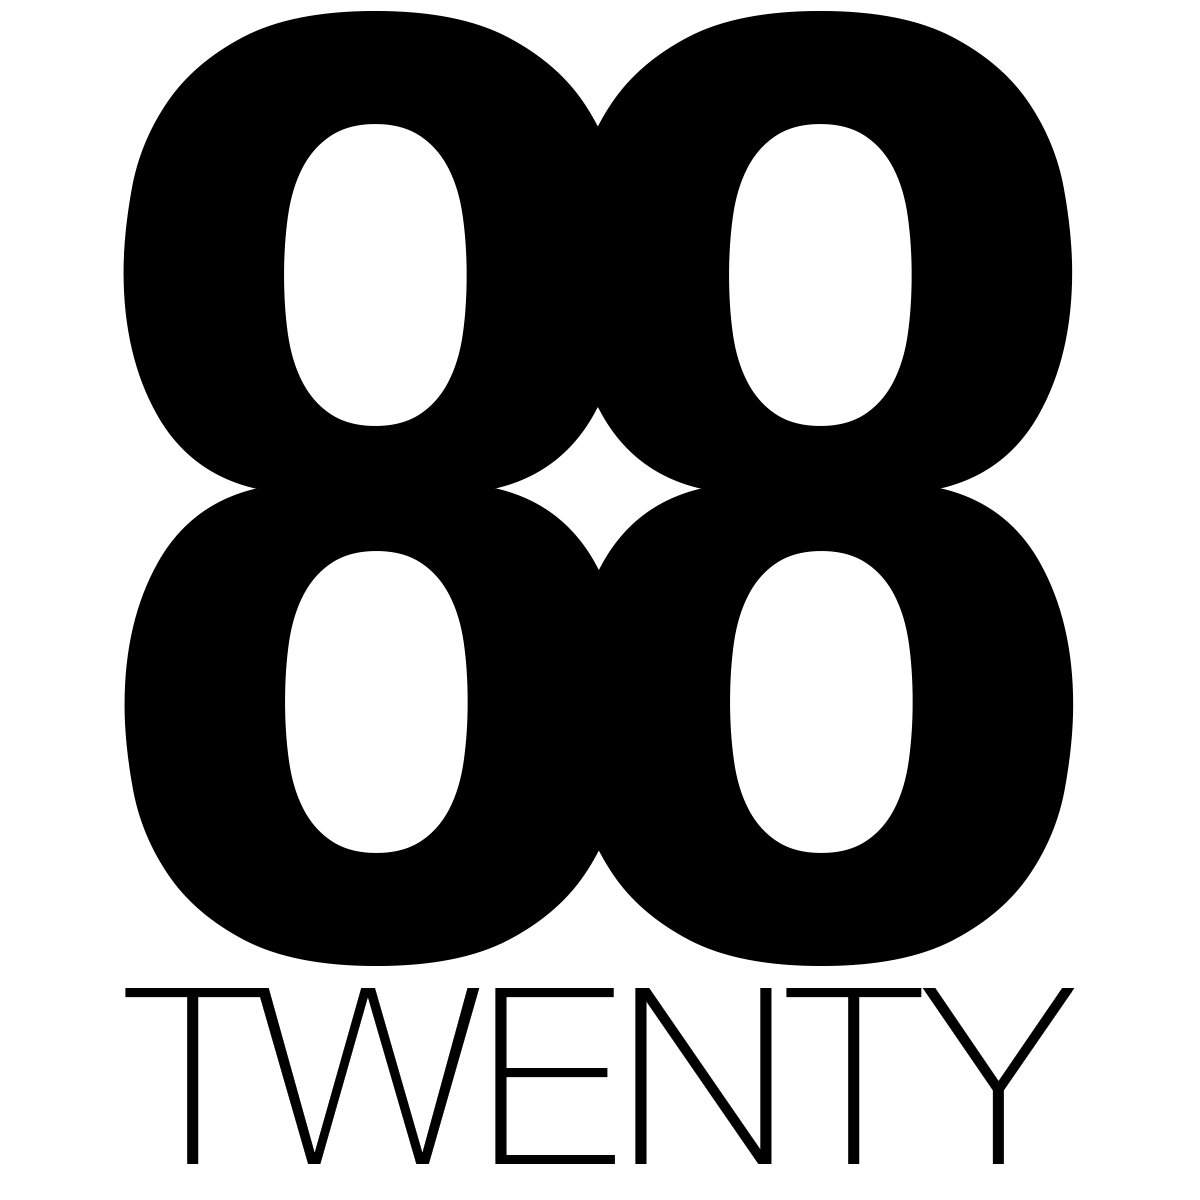 88Twenty Group